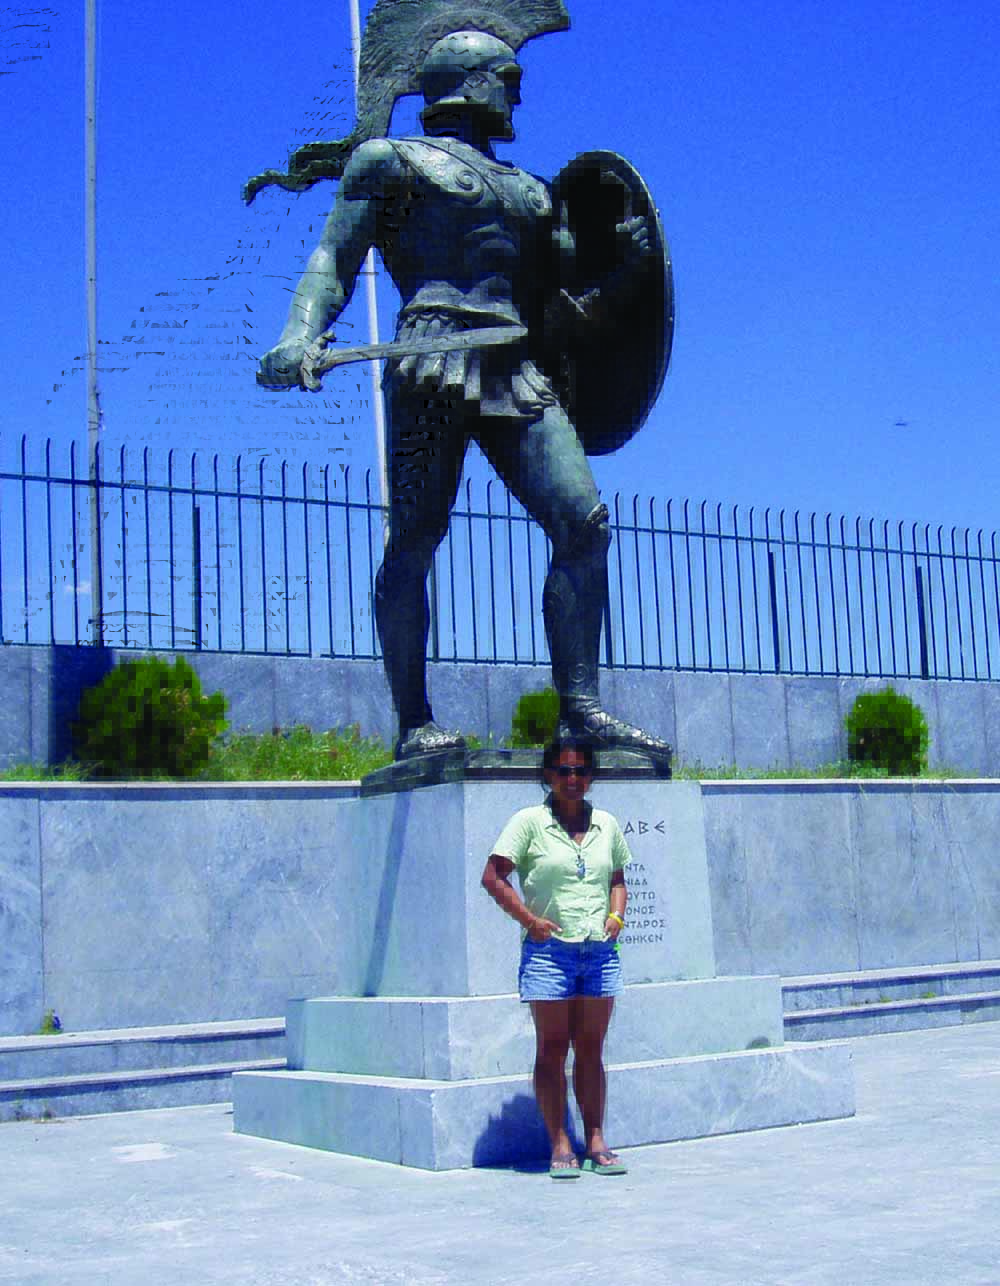 Sano strikes a pose under a statue of a Spartan soldier